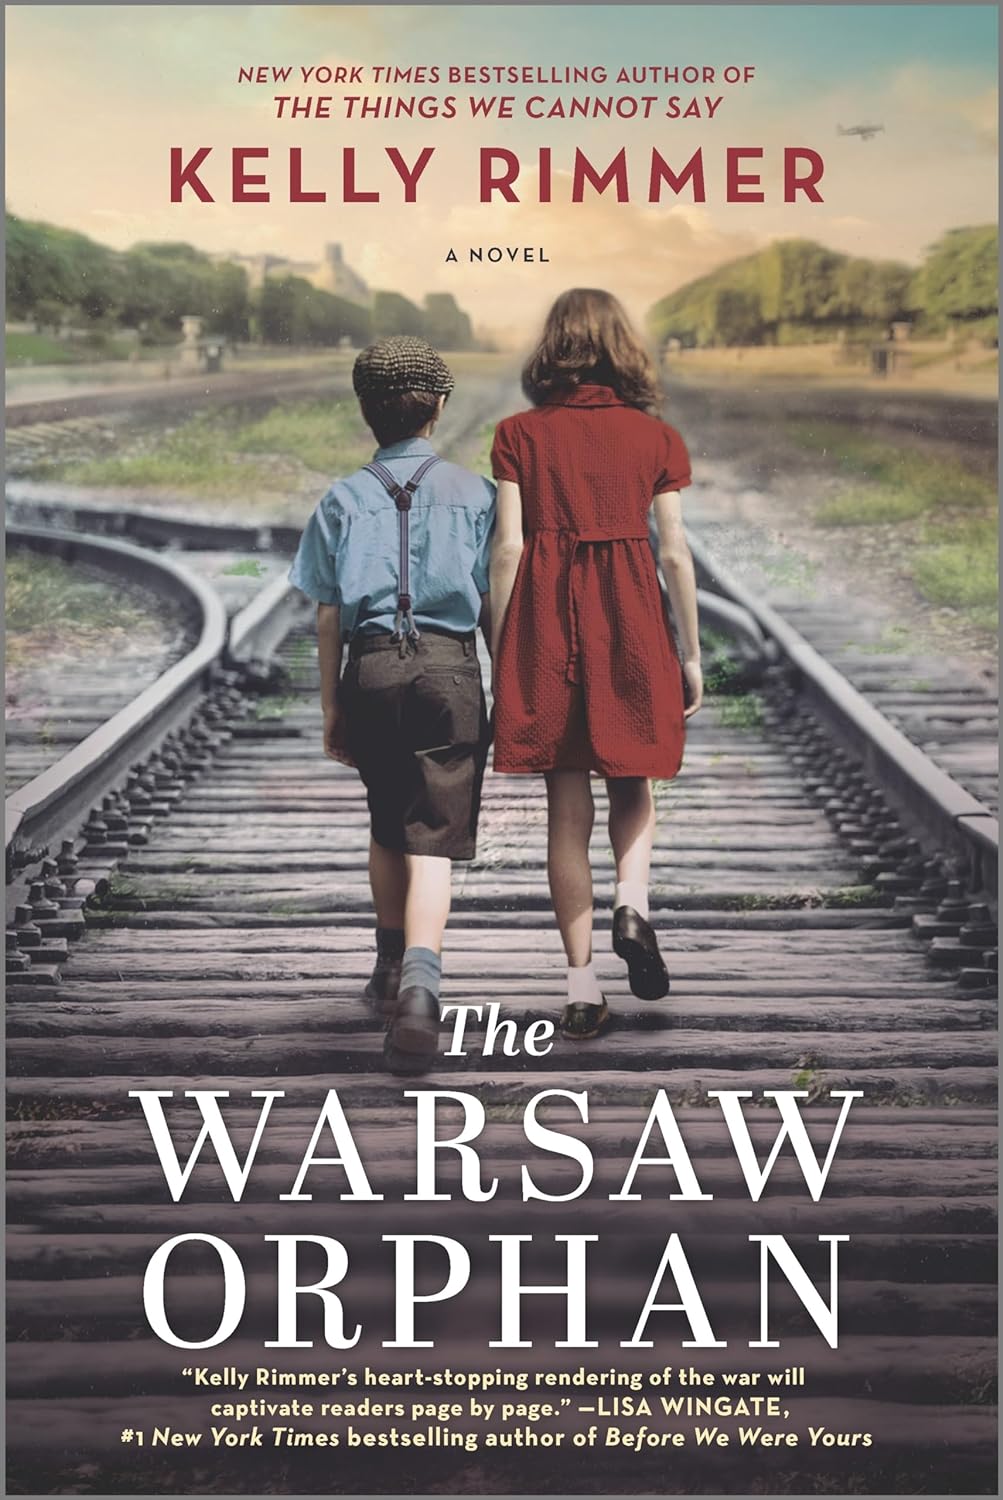 https://www.amazon.com/Warsaw-Orphan-WWII-Novel/dp/1525895990/ref=sr_1_1?crid=1DMTXKP0T51X5&keywords